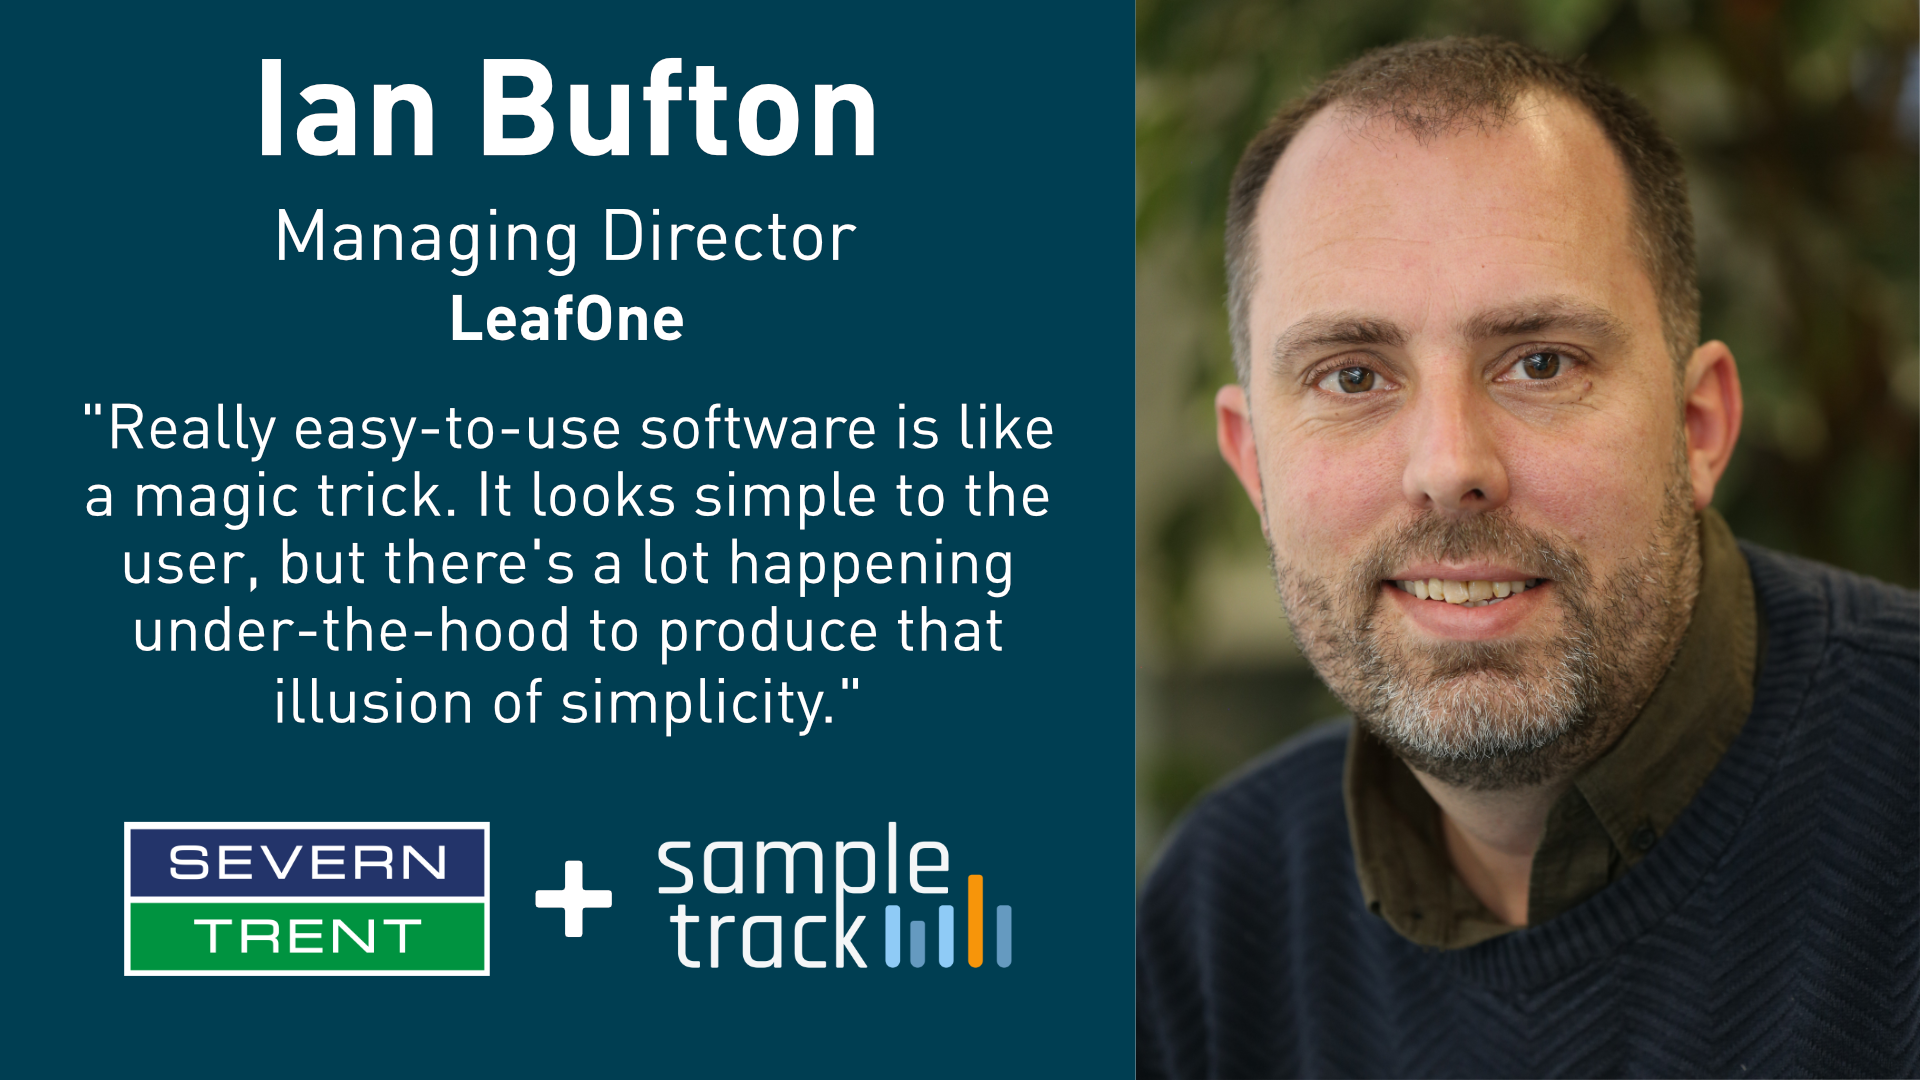 Meet Ian Bufton, Managing Director of LeafOne